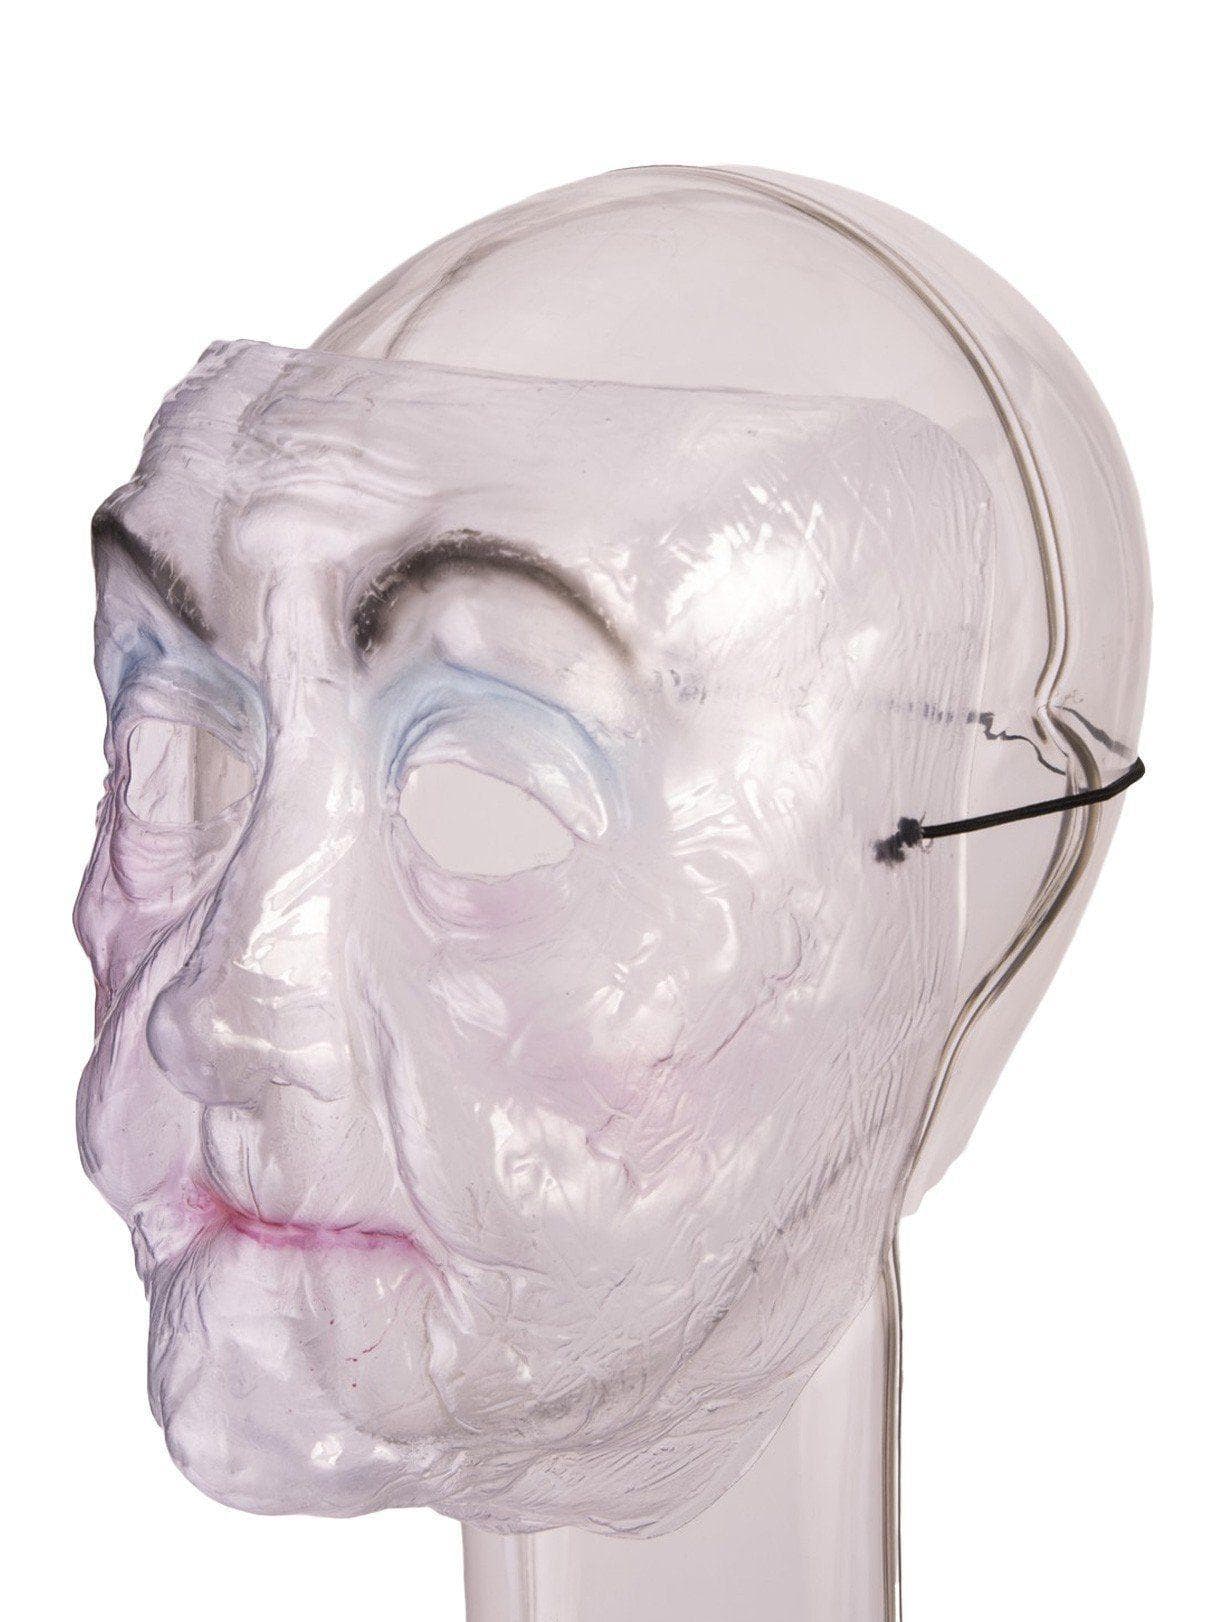 Old Lady Transparent Mask - costumes.com